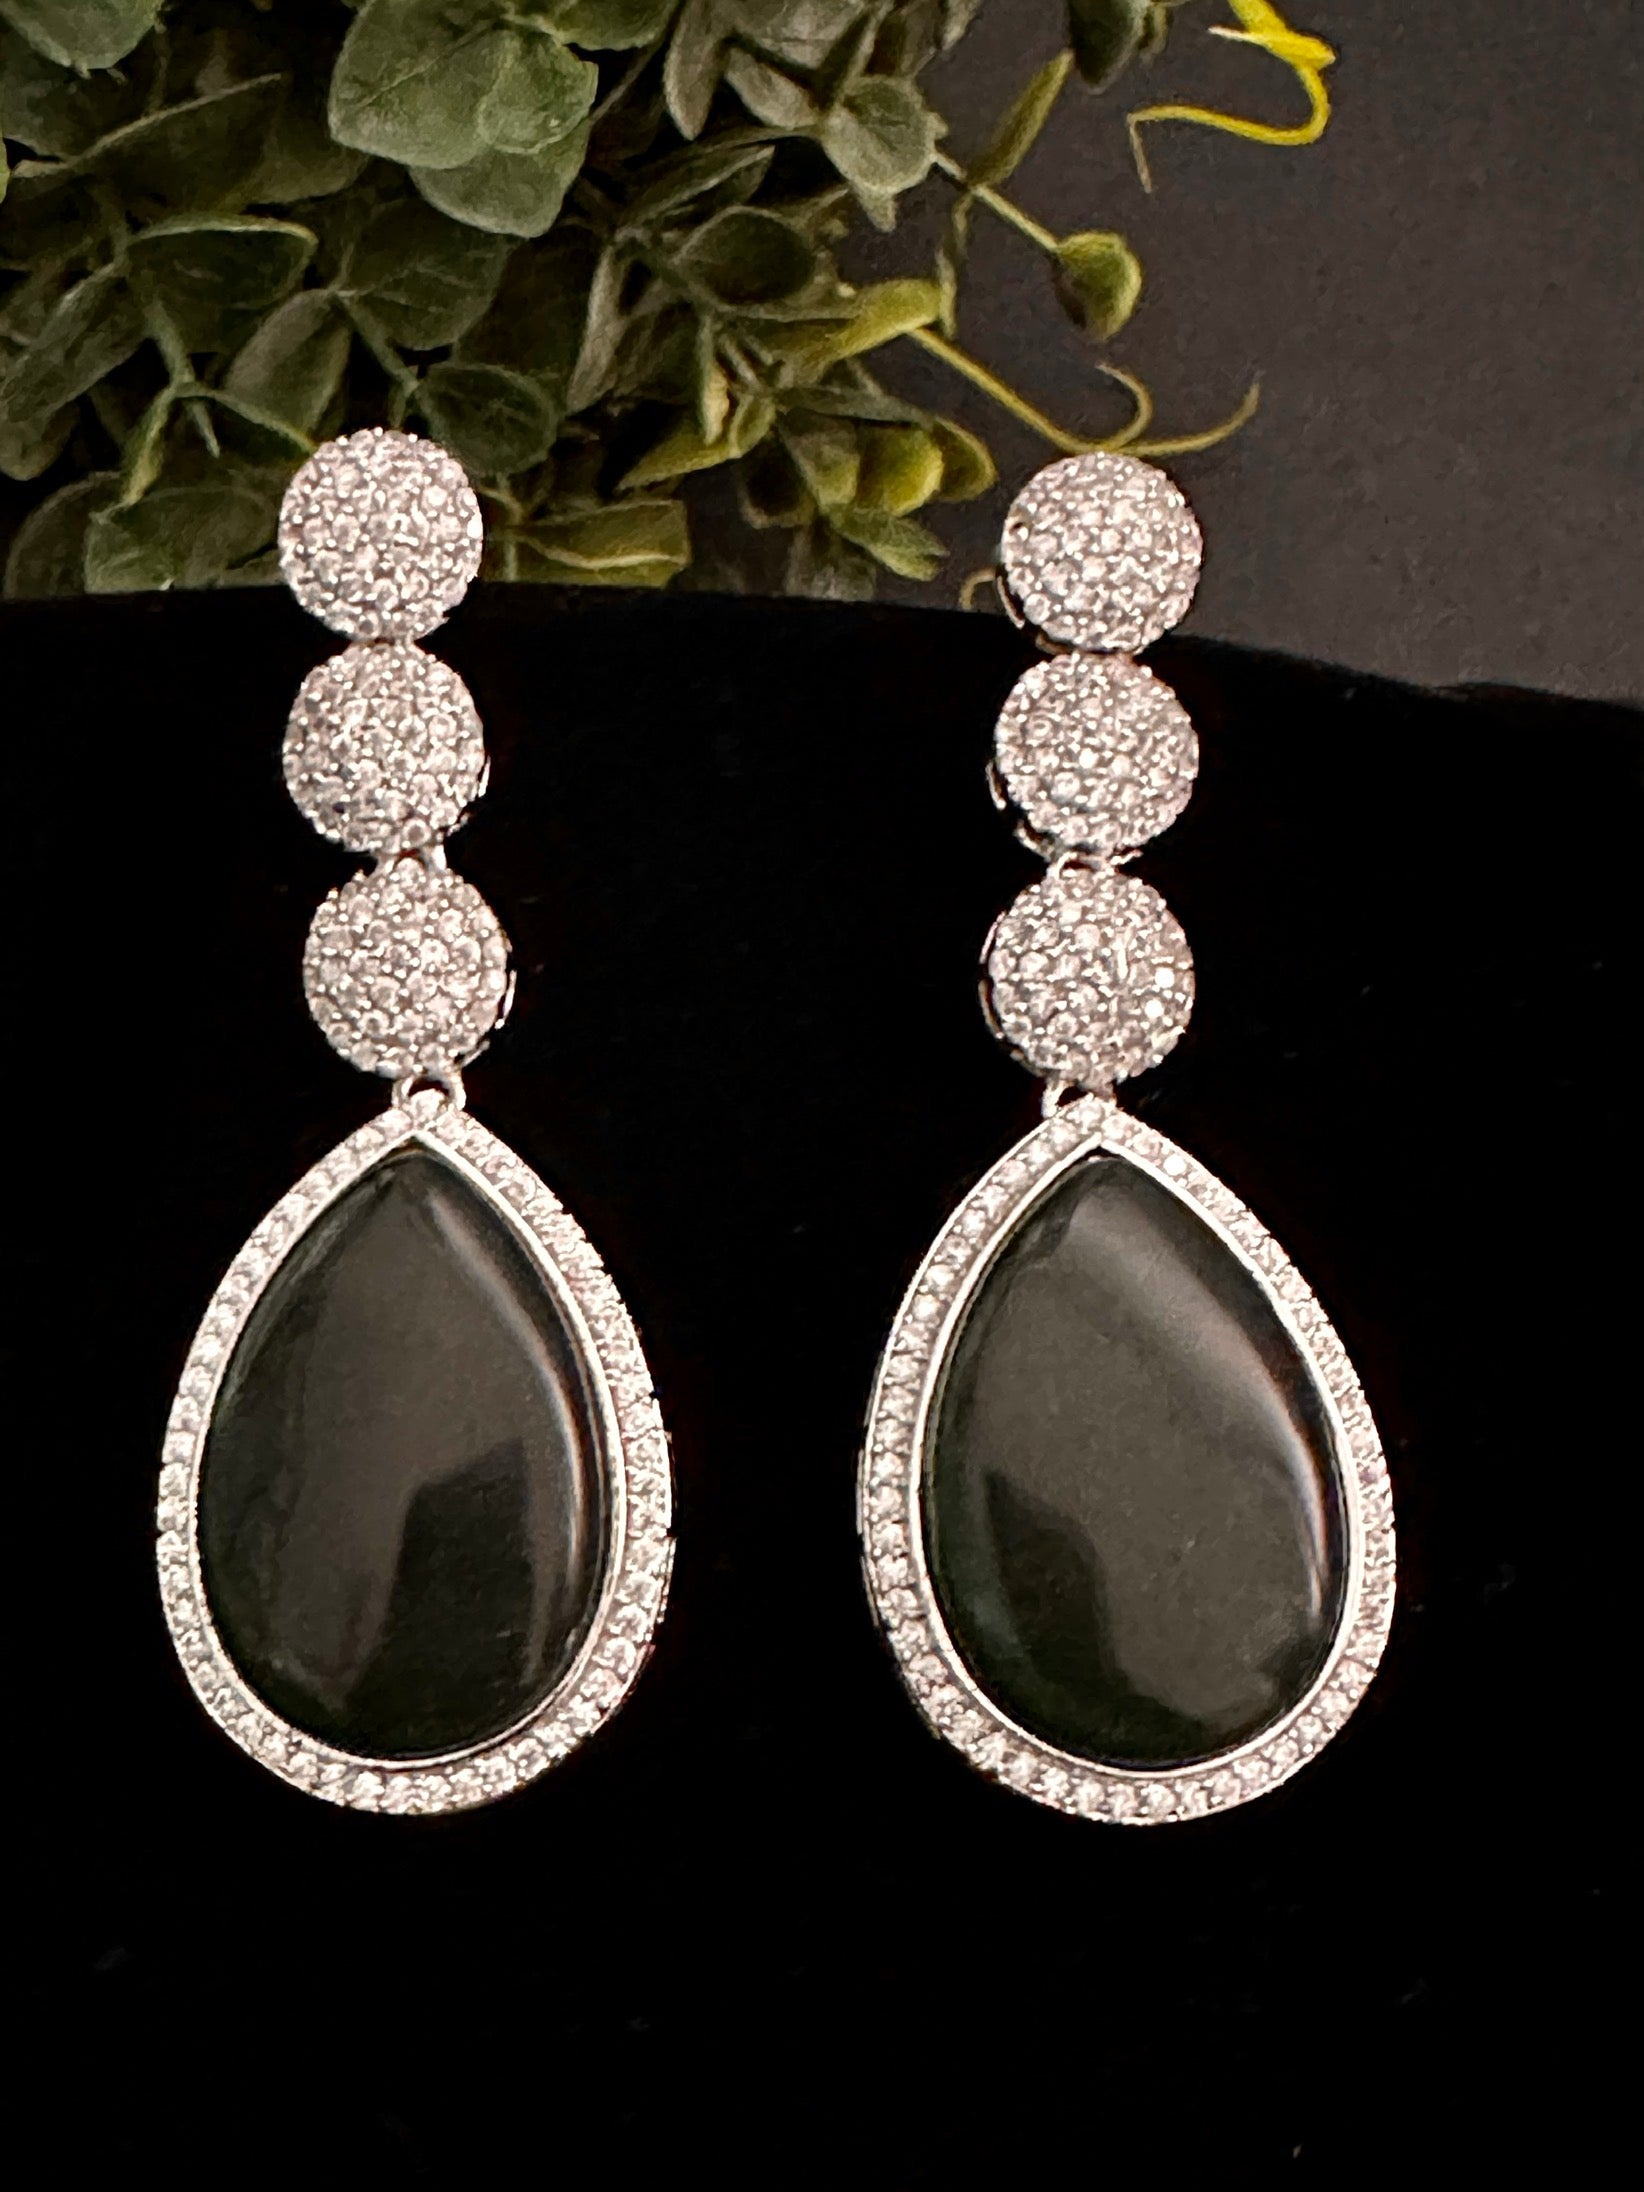 Stunning CZ earrings with big stones – RaRe N Precious